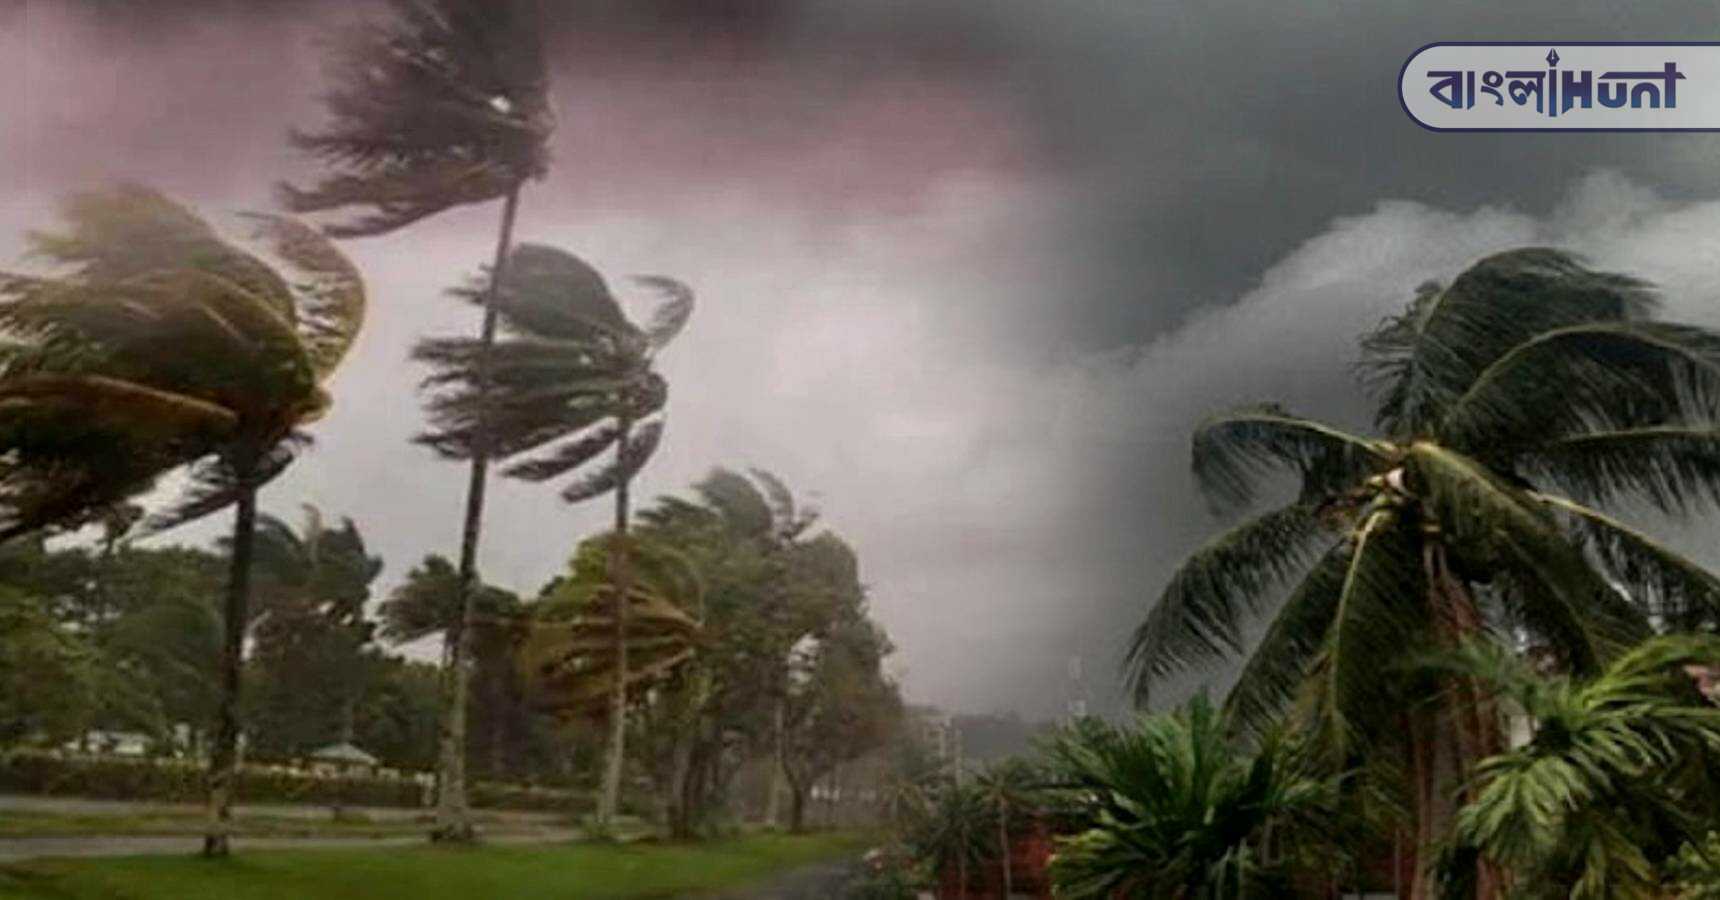 Cyclone,Mandas,West Bengal,weather,Winter season,Alipore Meteorological Department